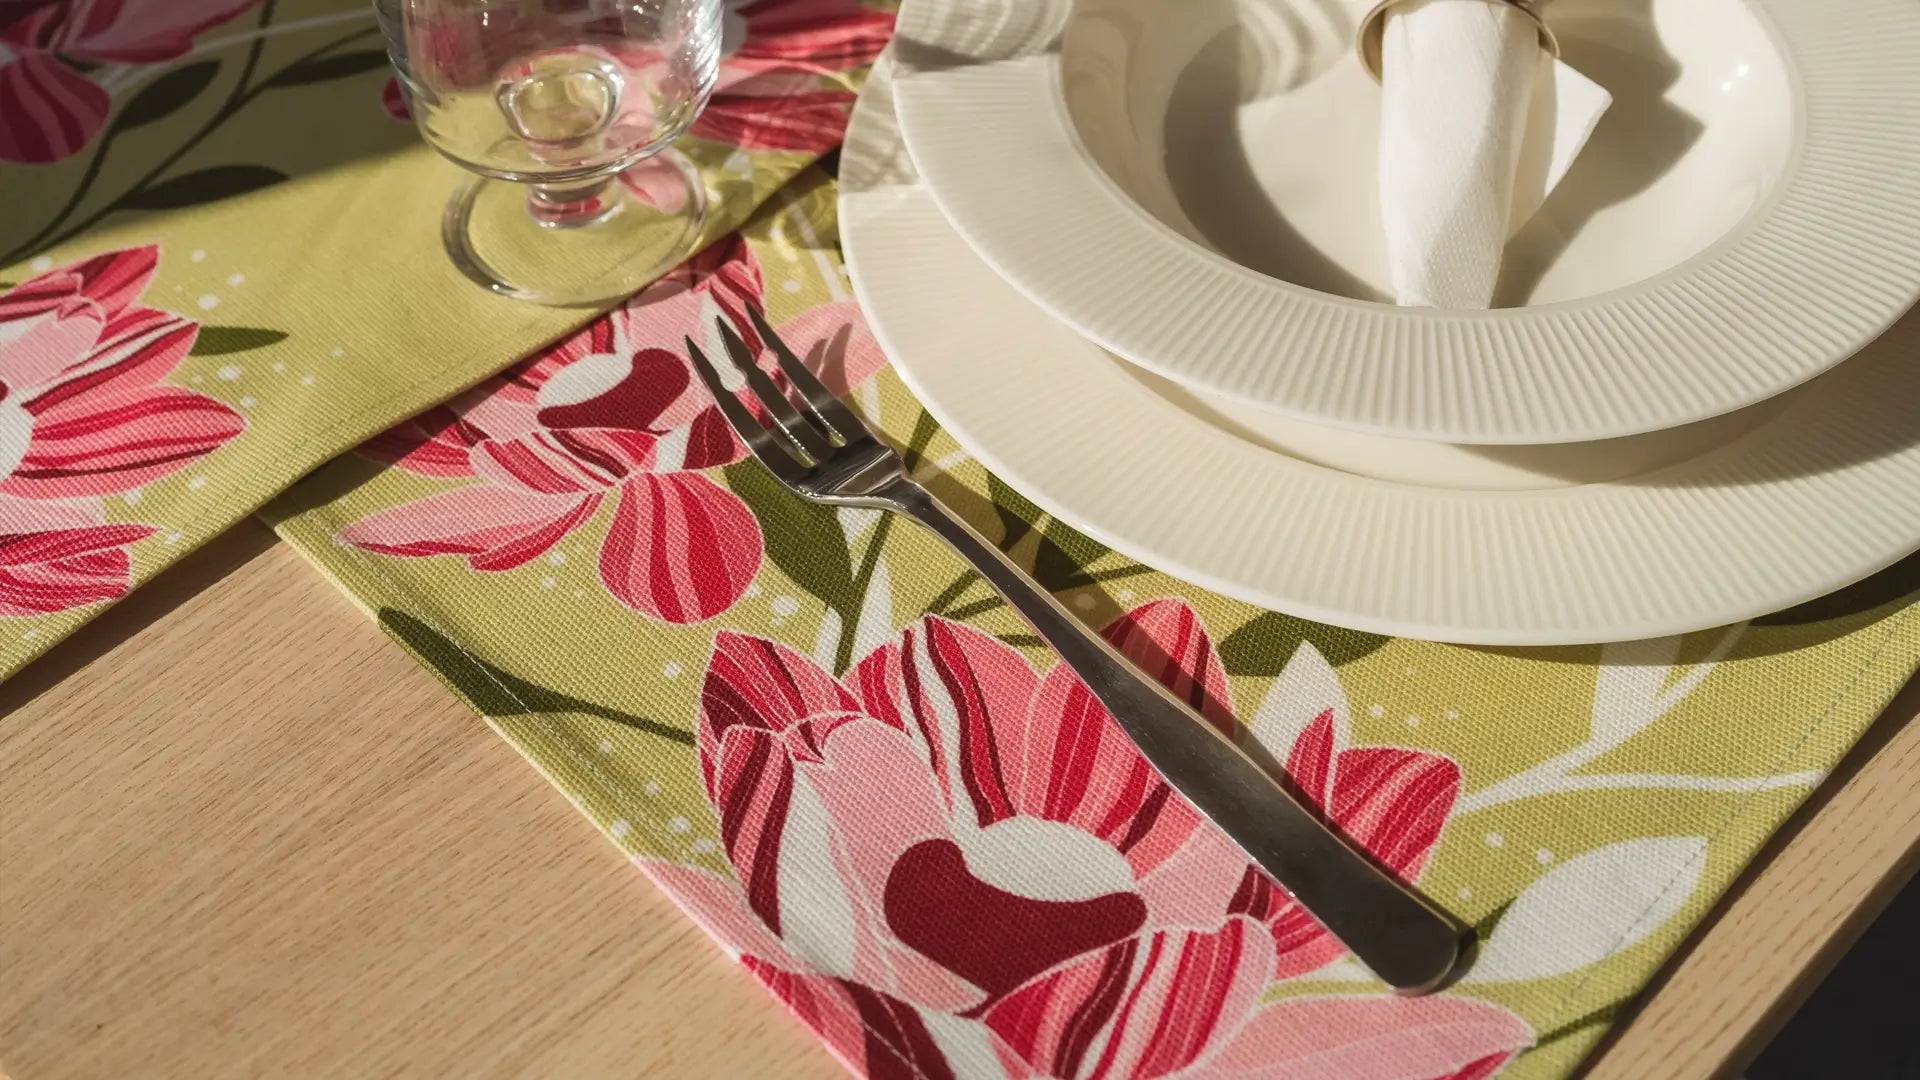 Morning Blush Table Linen Set by Alisa Textile Home Decor. 100% Organic Cotton